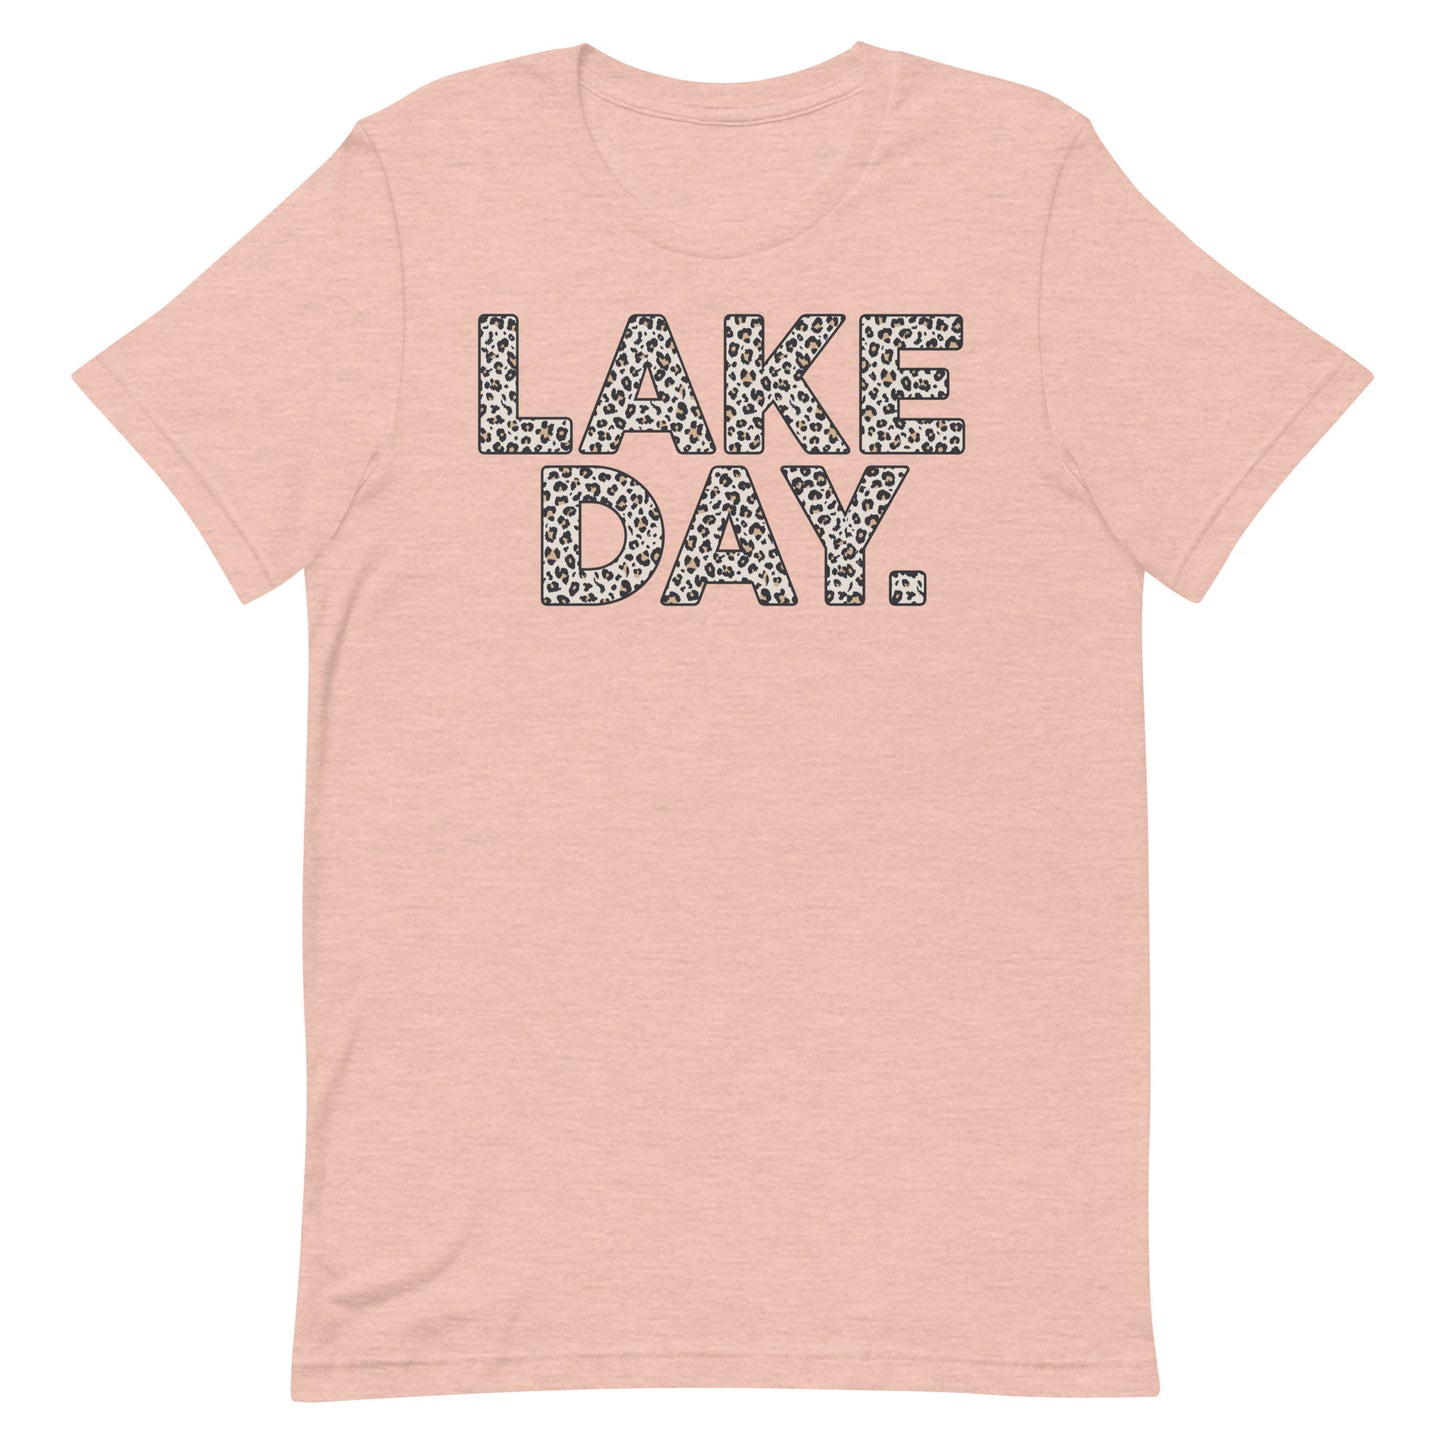 Lake Day Leopard Print Tee